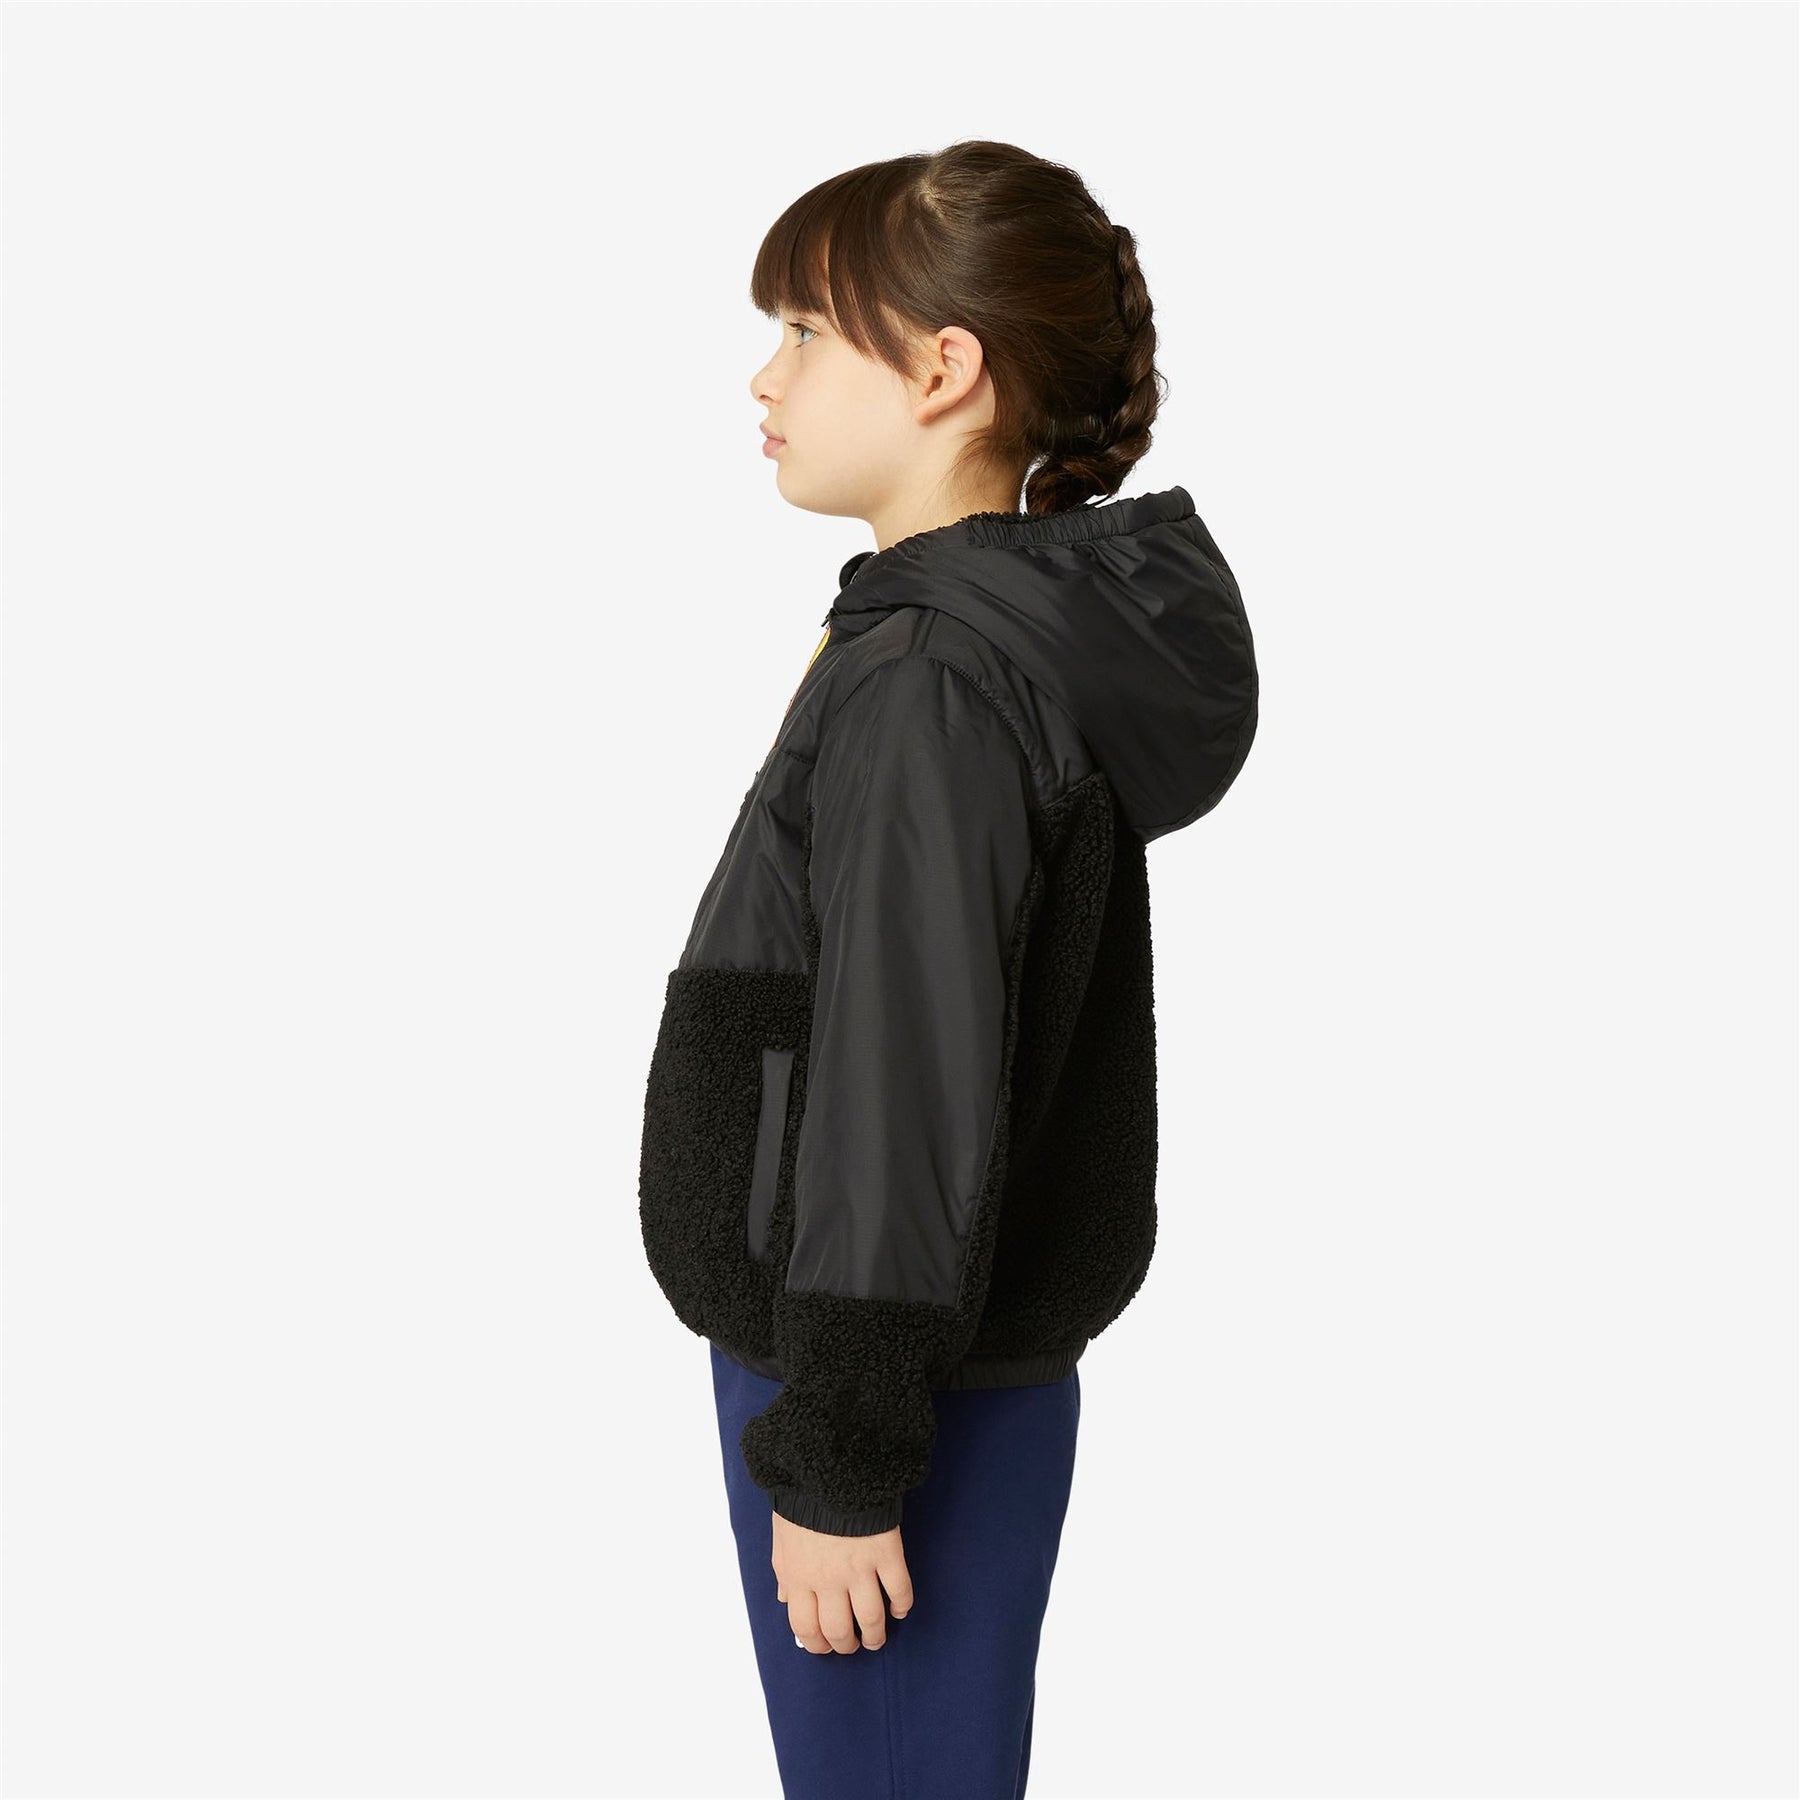 Neige Orsetto - Kids Fleece Top in Black